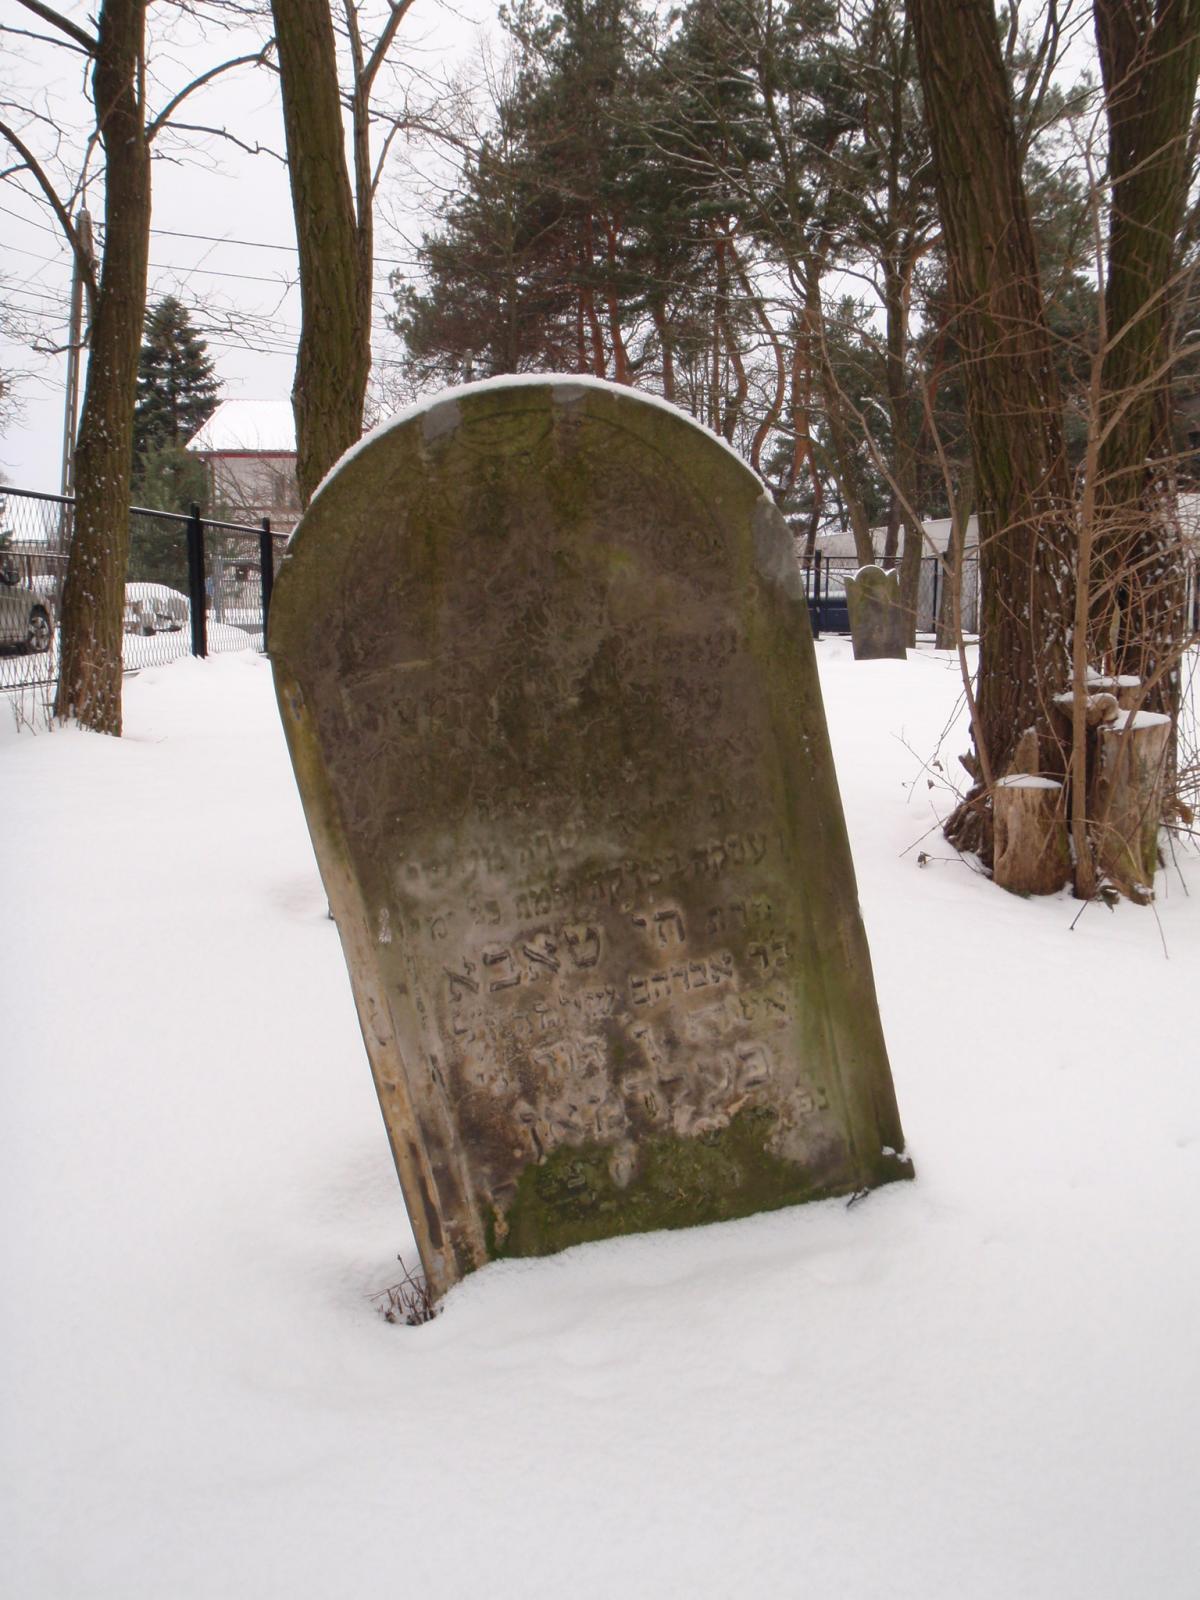 Wikipedia, Books on Jewish gravestones in Poland, Curtain on Jewish gravestones in Poland, Jewish ce